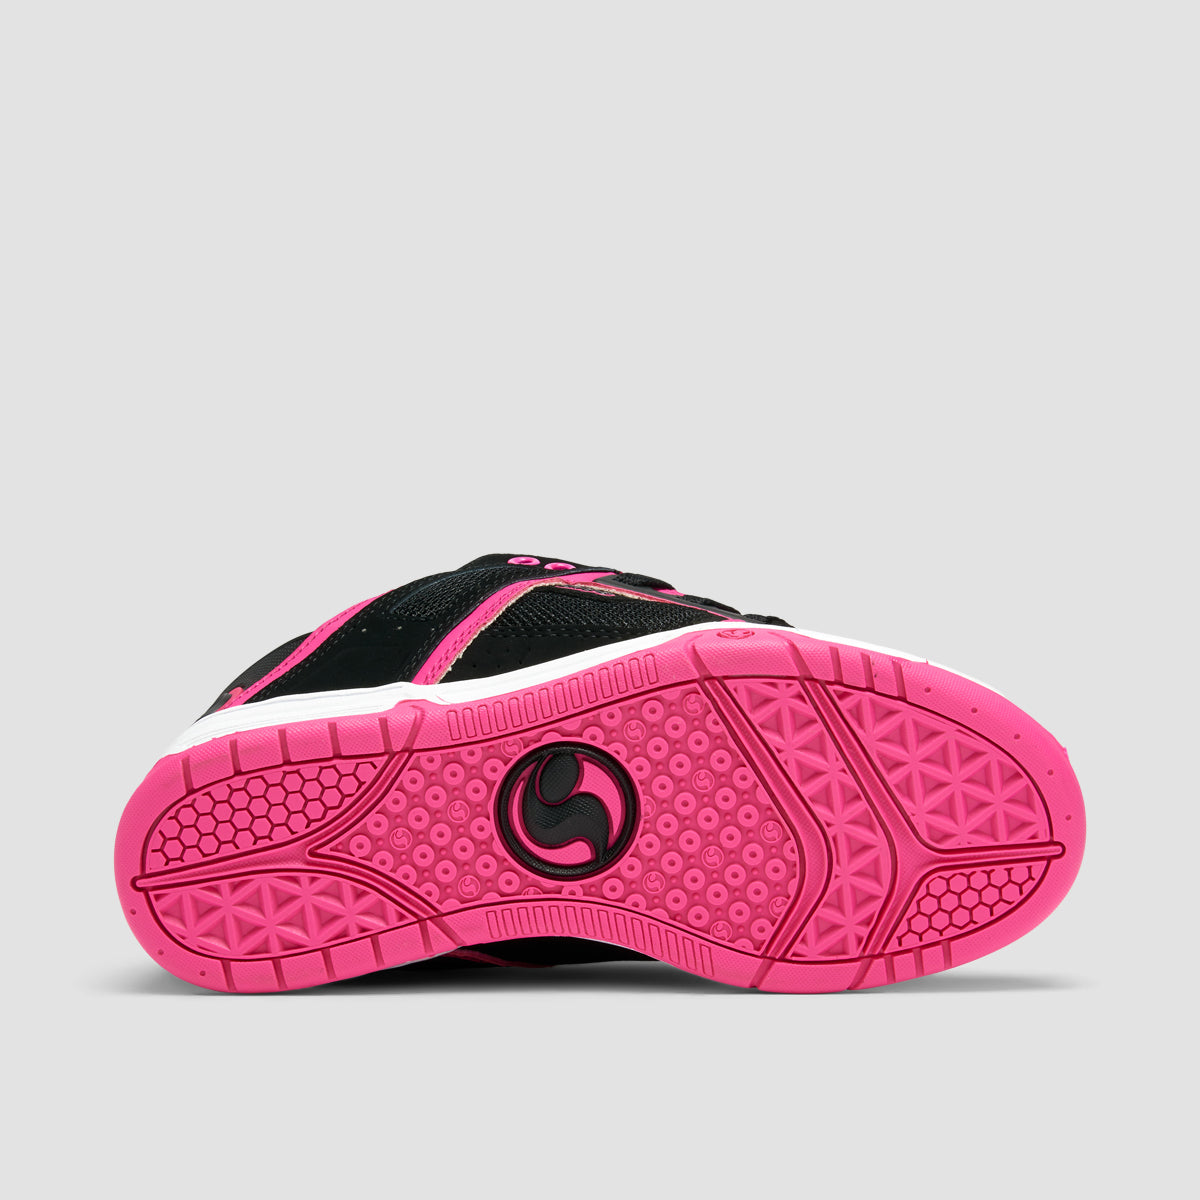 DVS Comanche Shoes - Black/Pink/White Nubuck - Womens